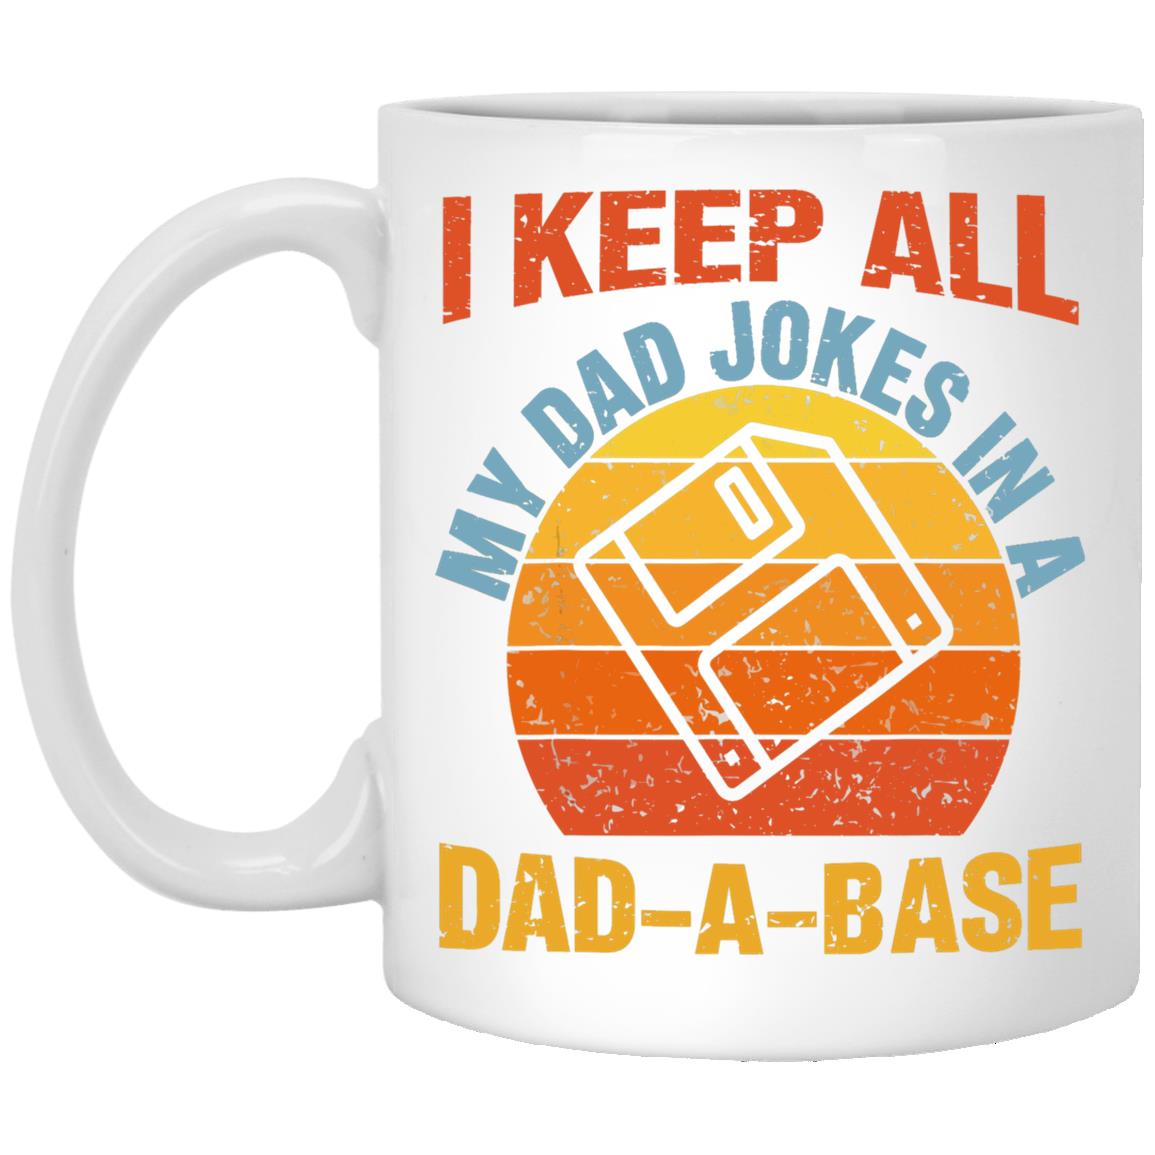 Vintage Dad Gift I Keep All My Dad Jokes In A Dad-A-Base Mug